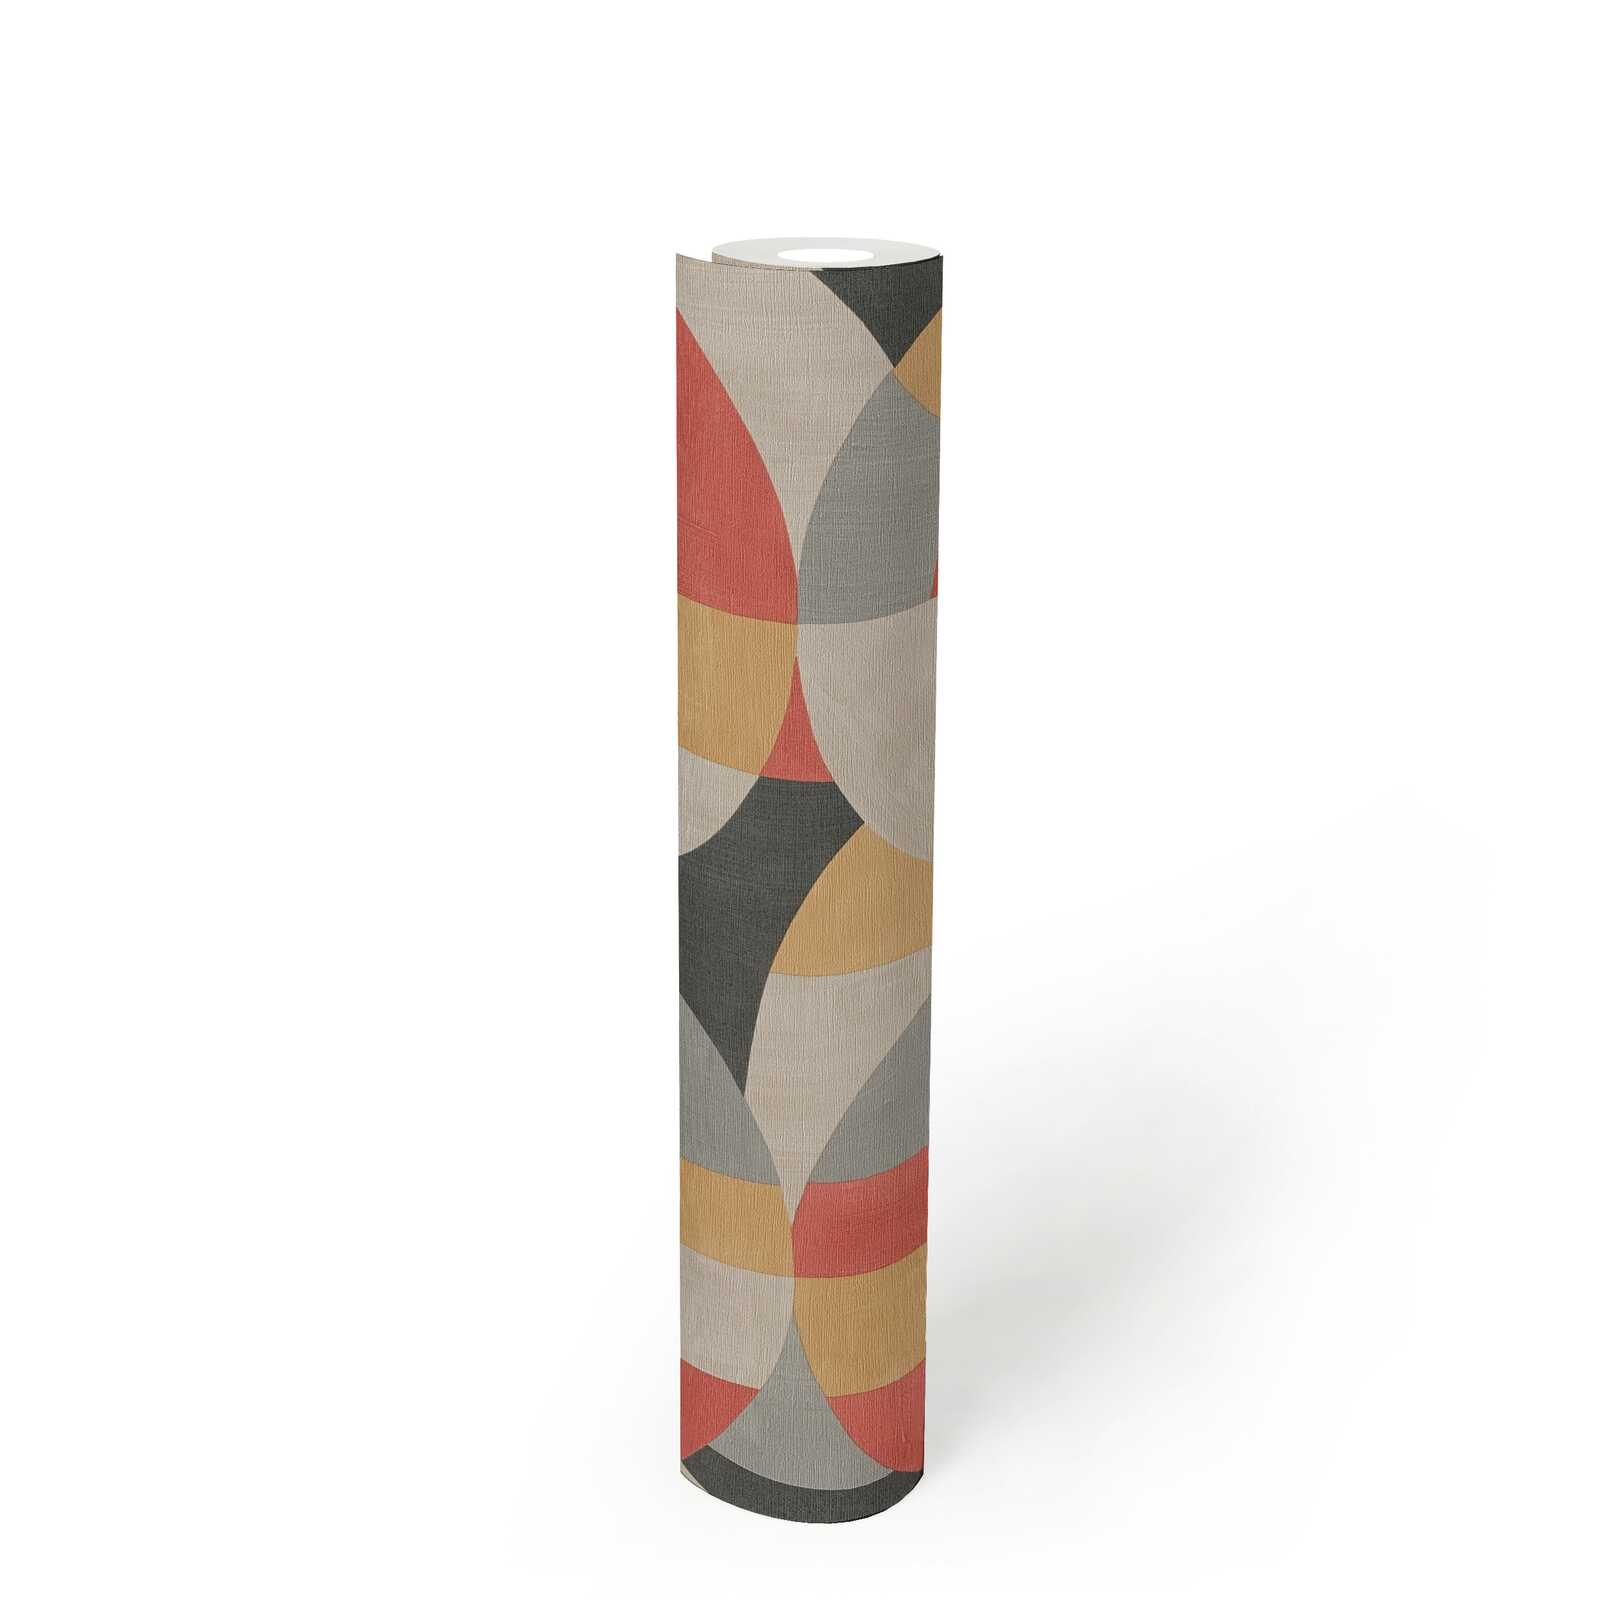             Carta da parati 3D in tessuto non tessuto in stile Bauhaus geometrico - grigio, beige, rosso
        